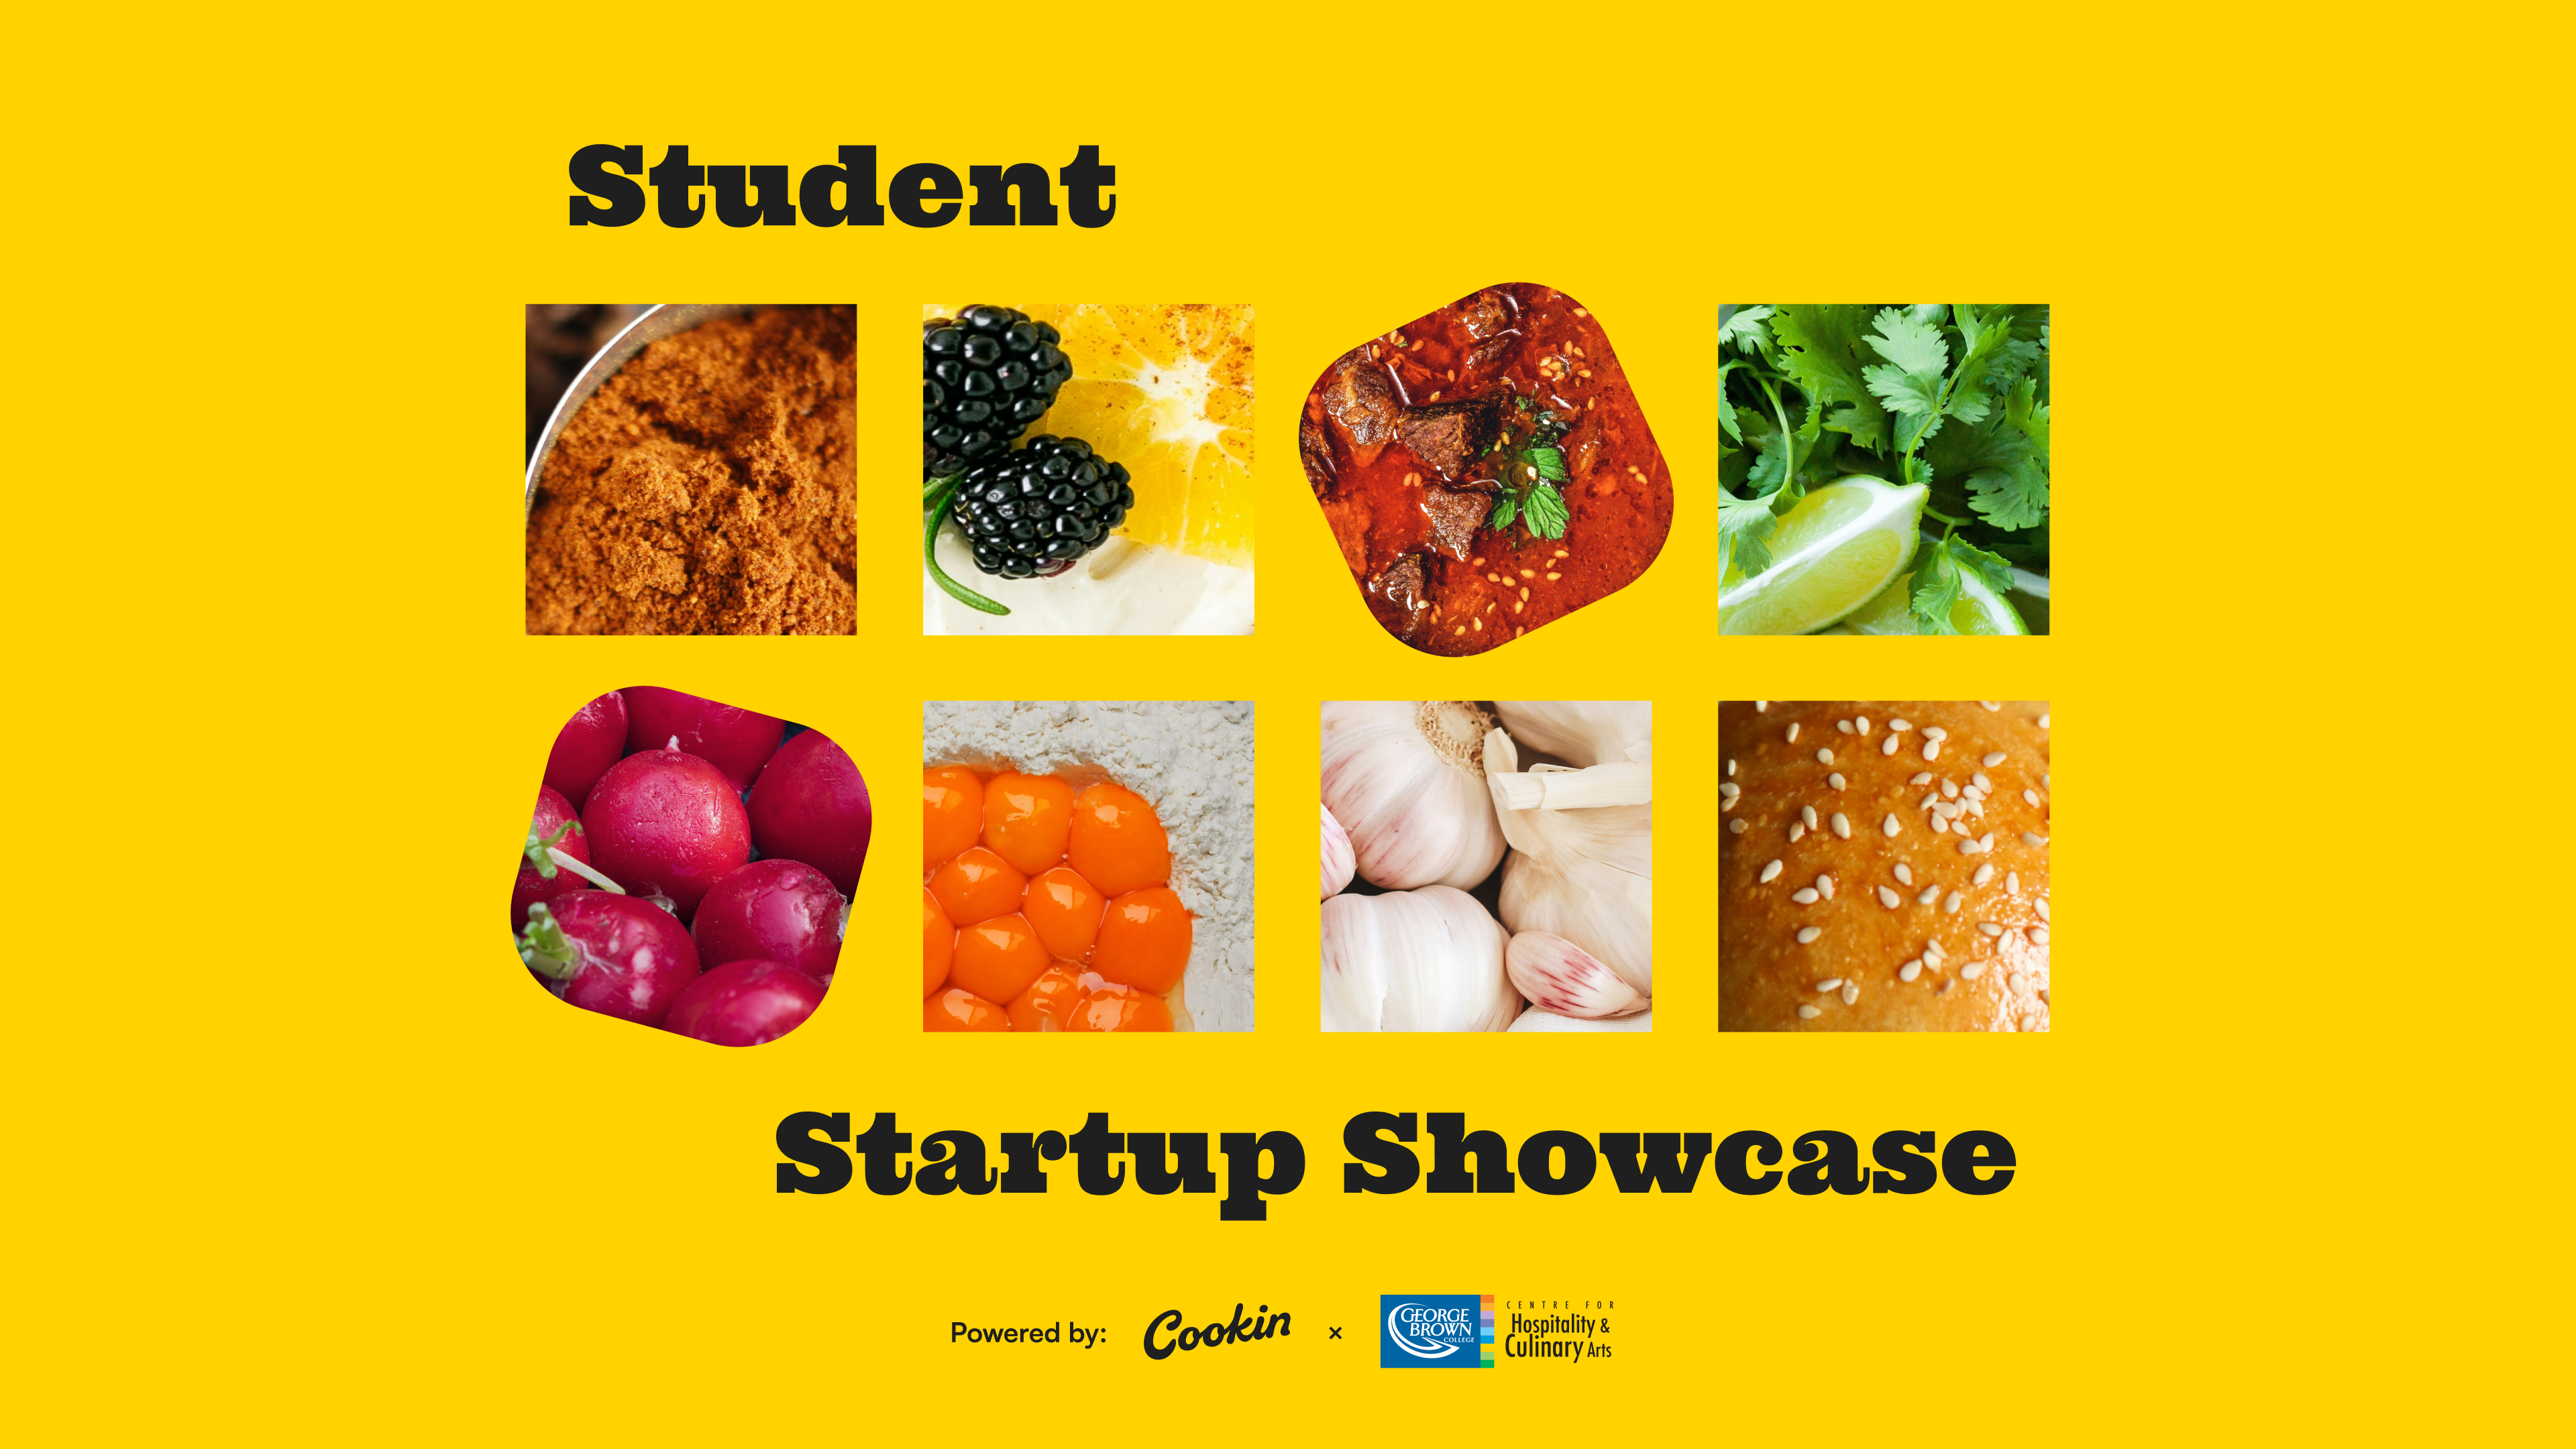 Student Starup Showcase